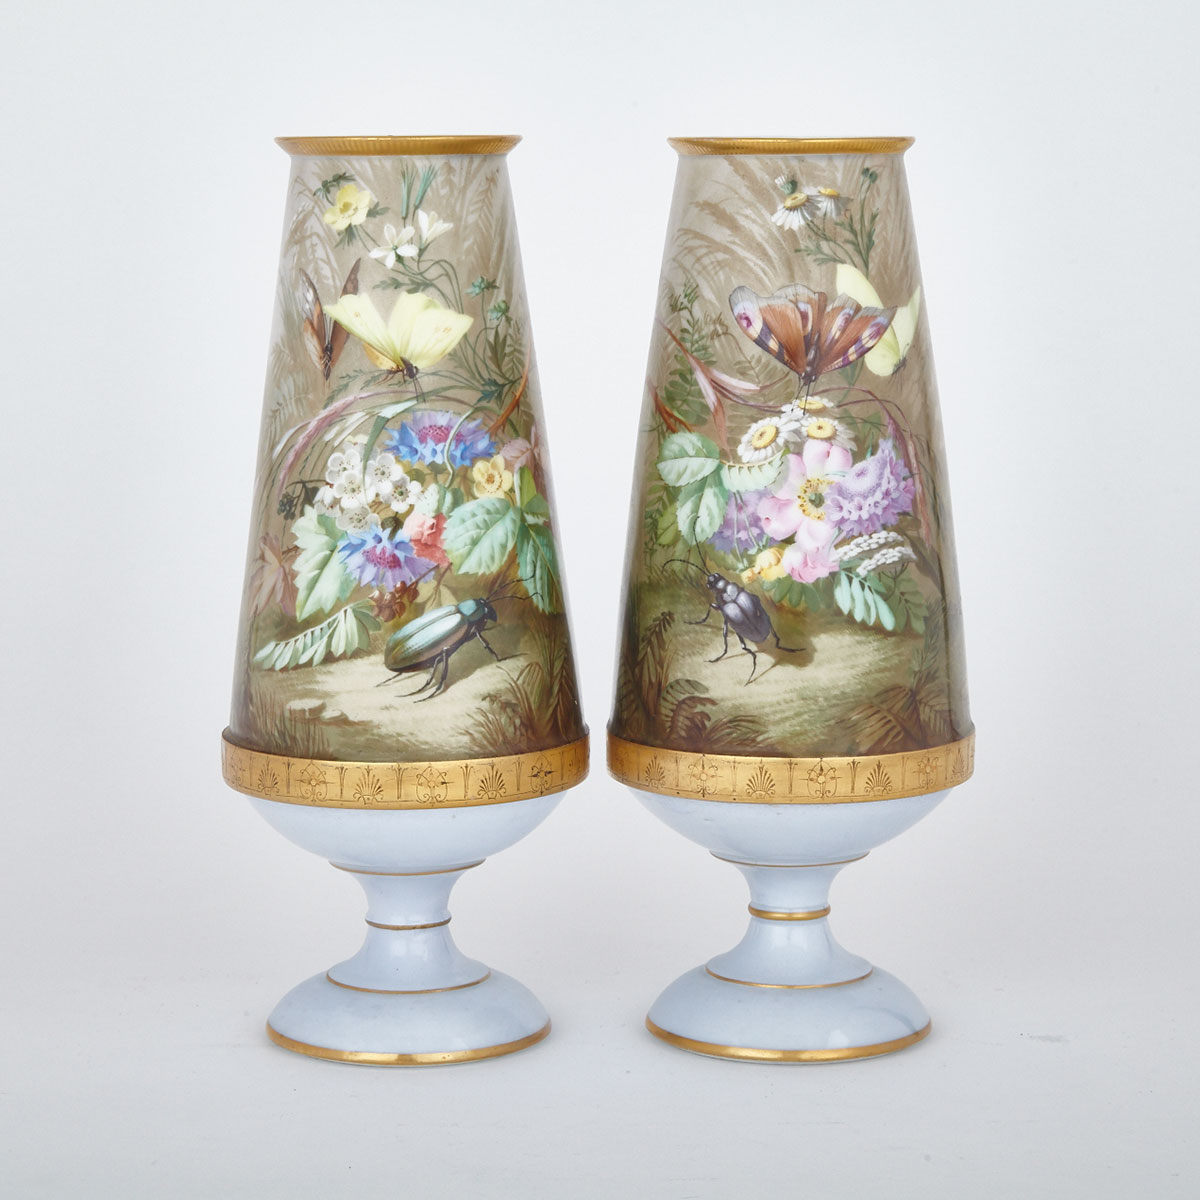 Pair of French Porcelain Vases, c.1870